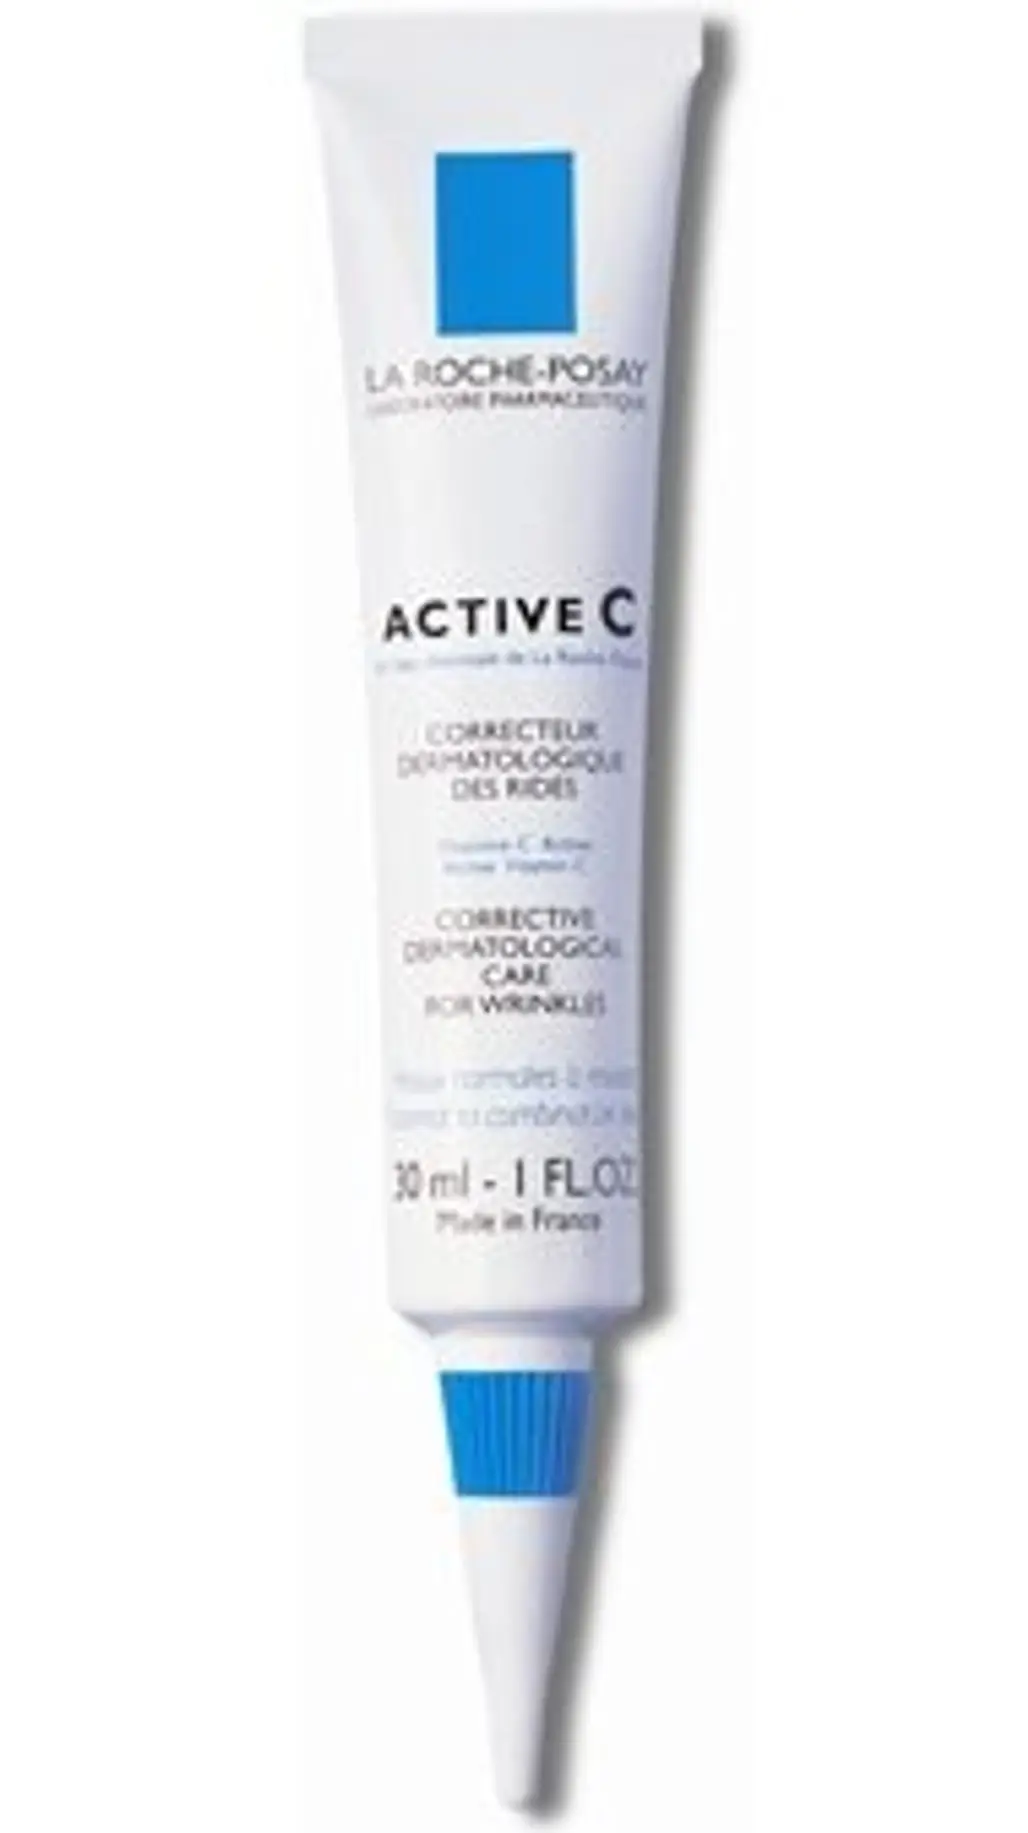 La Roche Posay Active C Facial Skincare Normal to Combination Skin